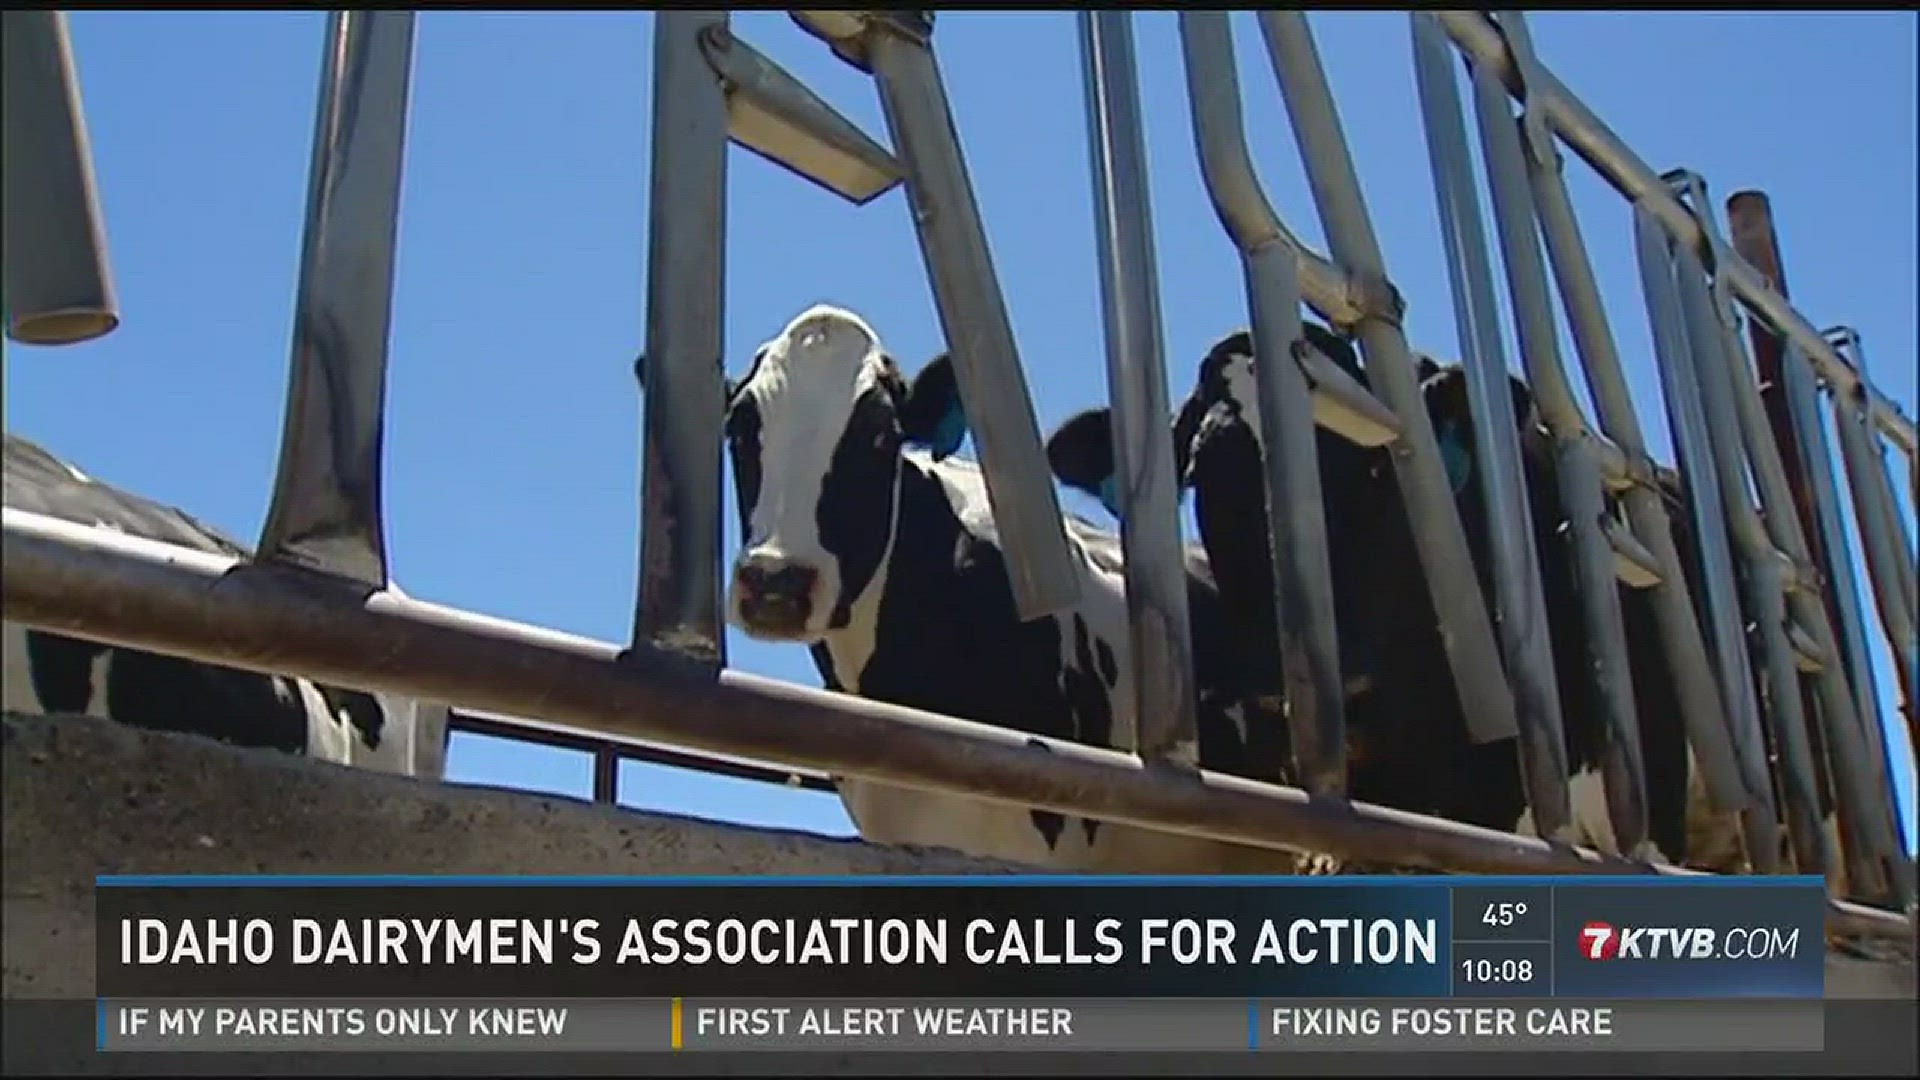 Idaho Dairymen's Association calls for action.